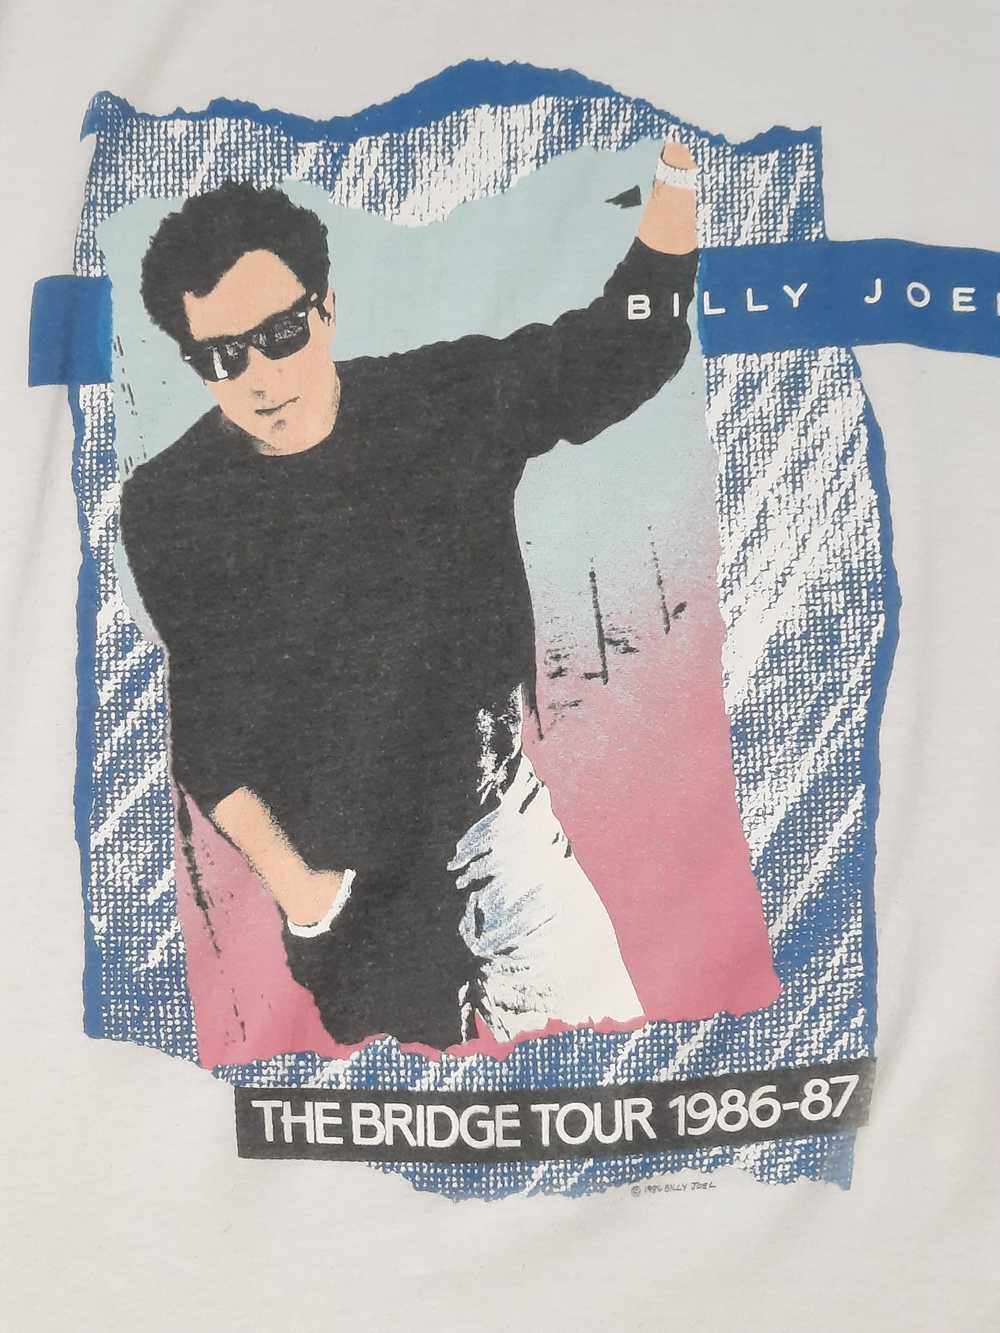 Billy Joel “The Bridge” Tour 1986-87 - image 2